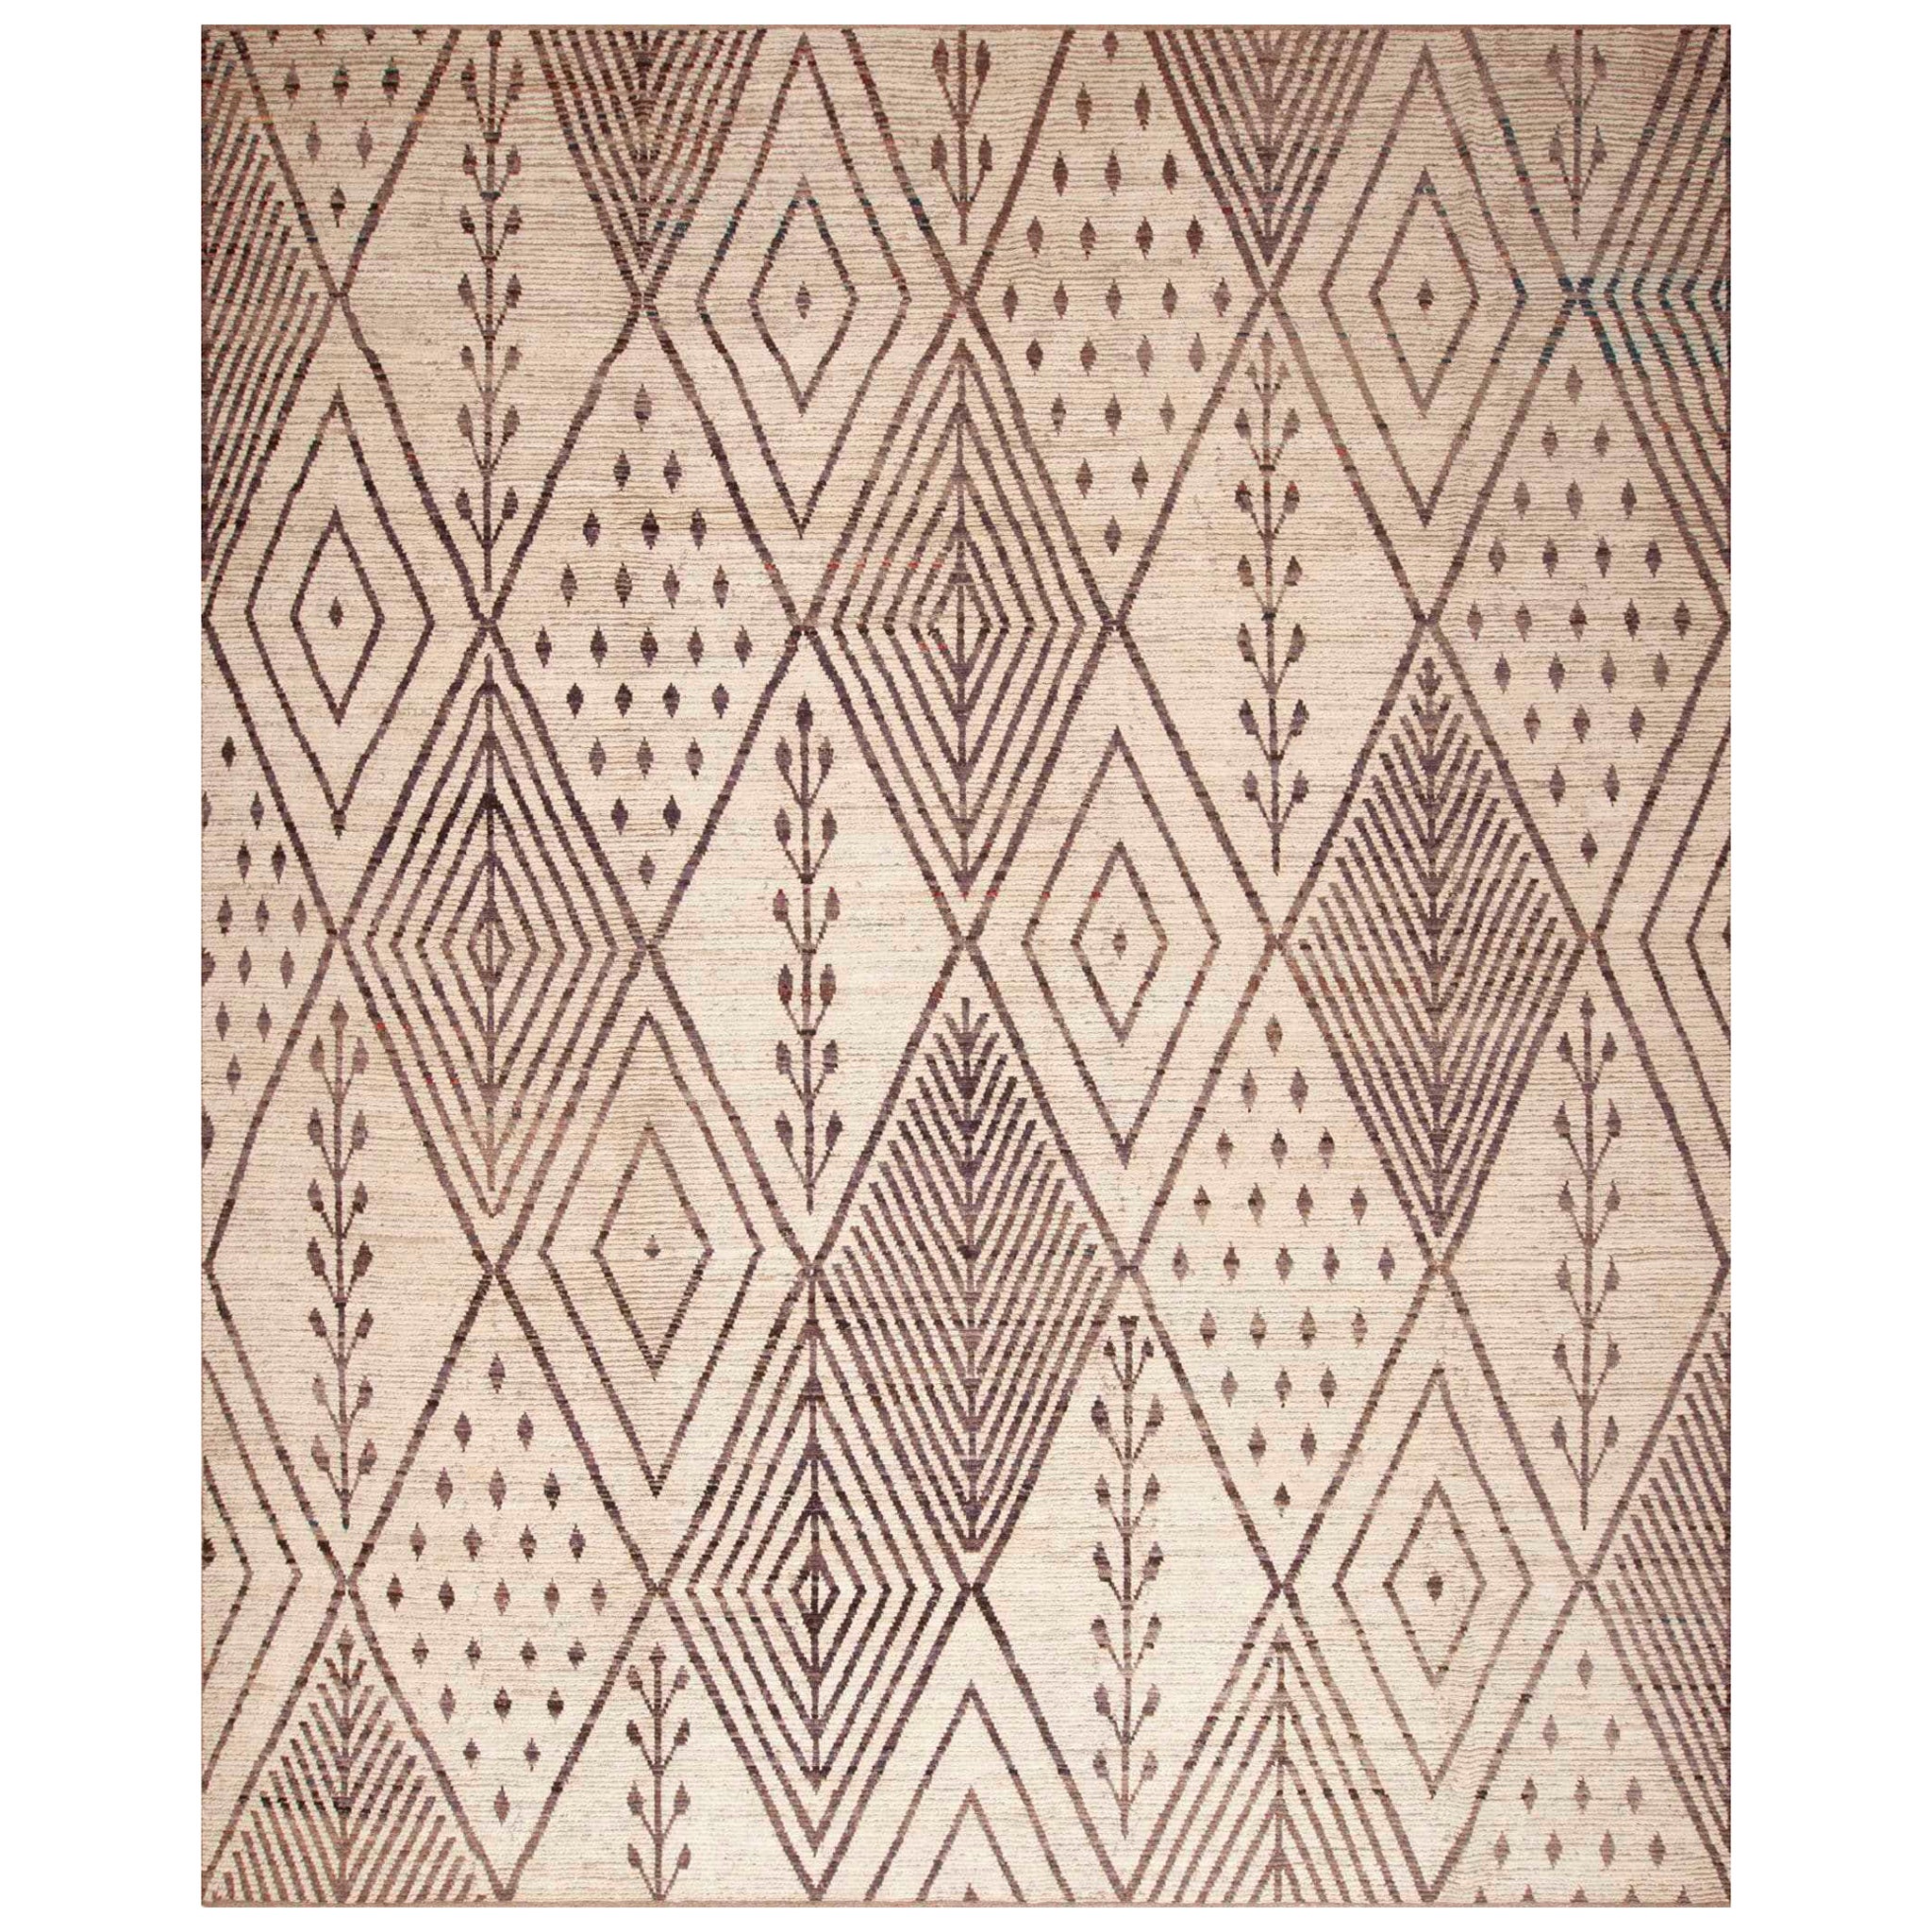 Nazmiyal Collection Tribal Geometric Beni Ourain Design Modern Rug 12' x 15'3" For Sale